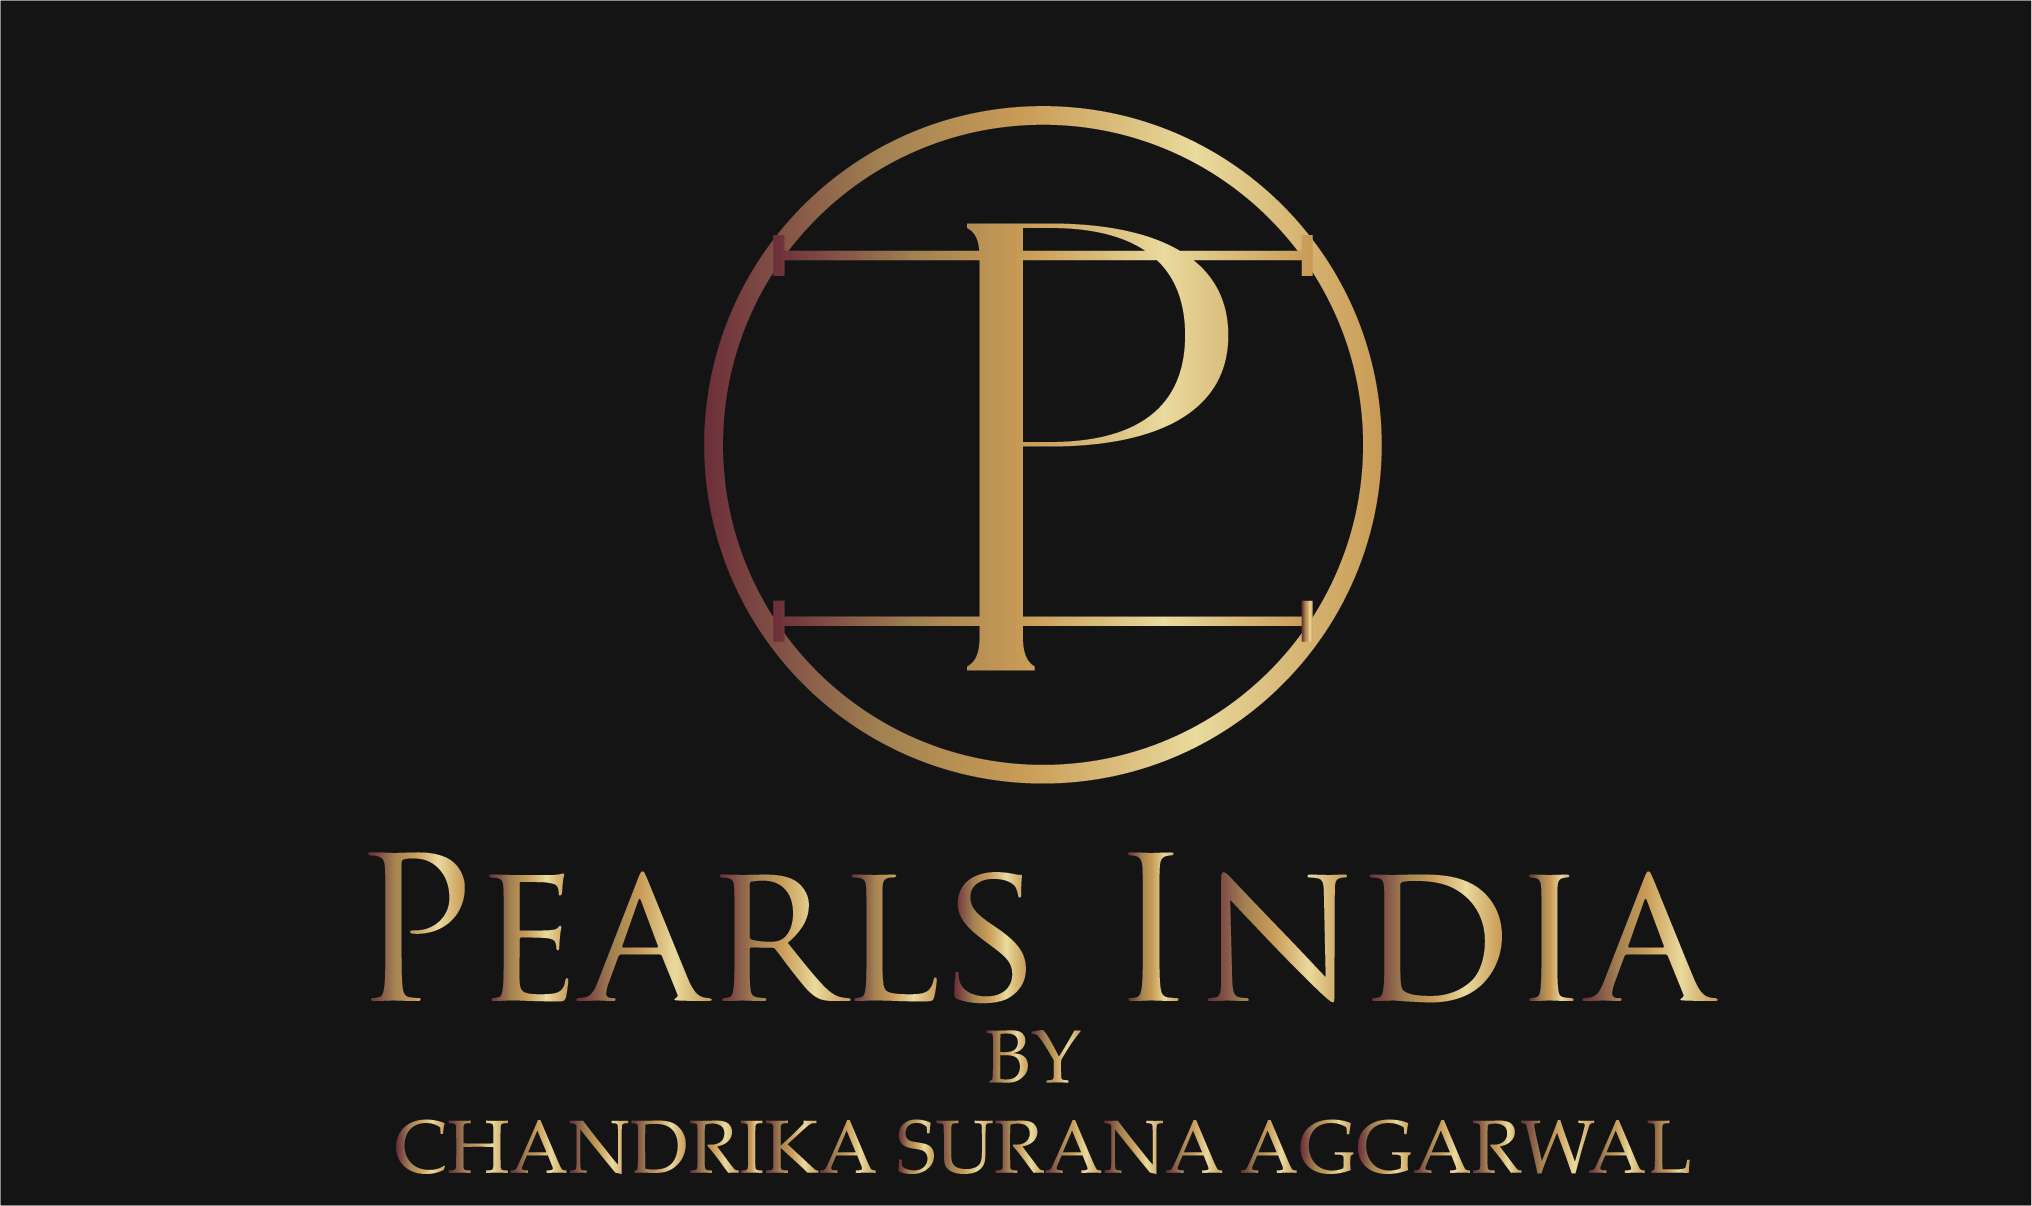 PEARLS INDIA